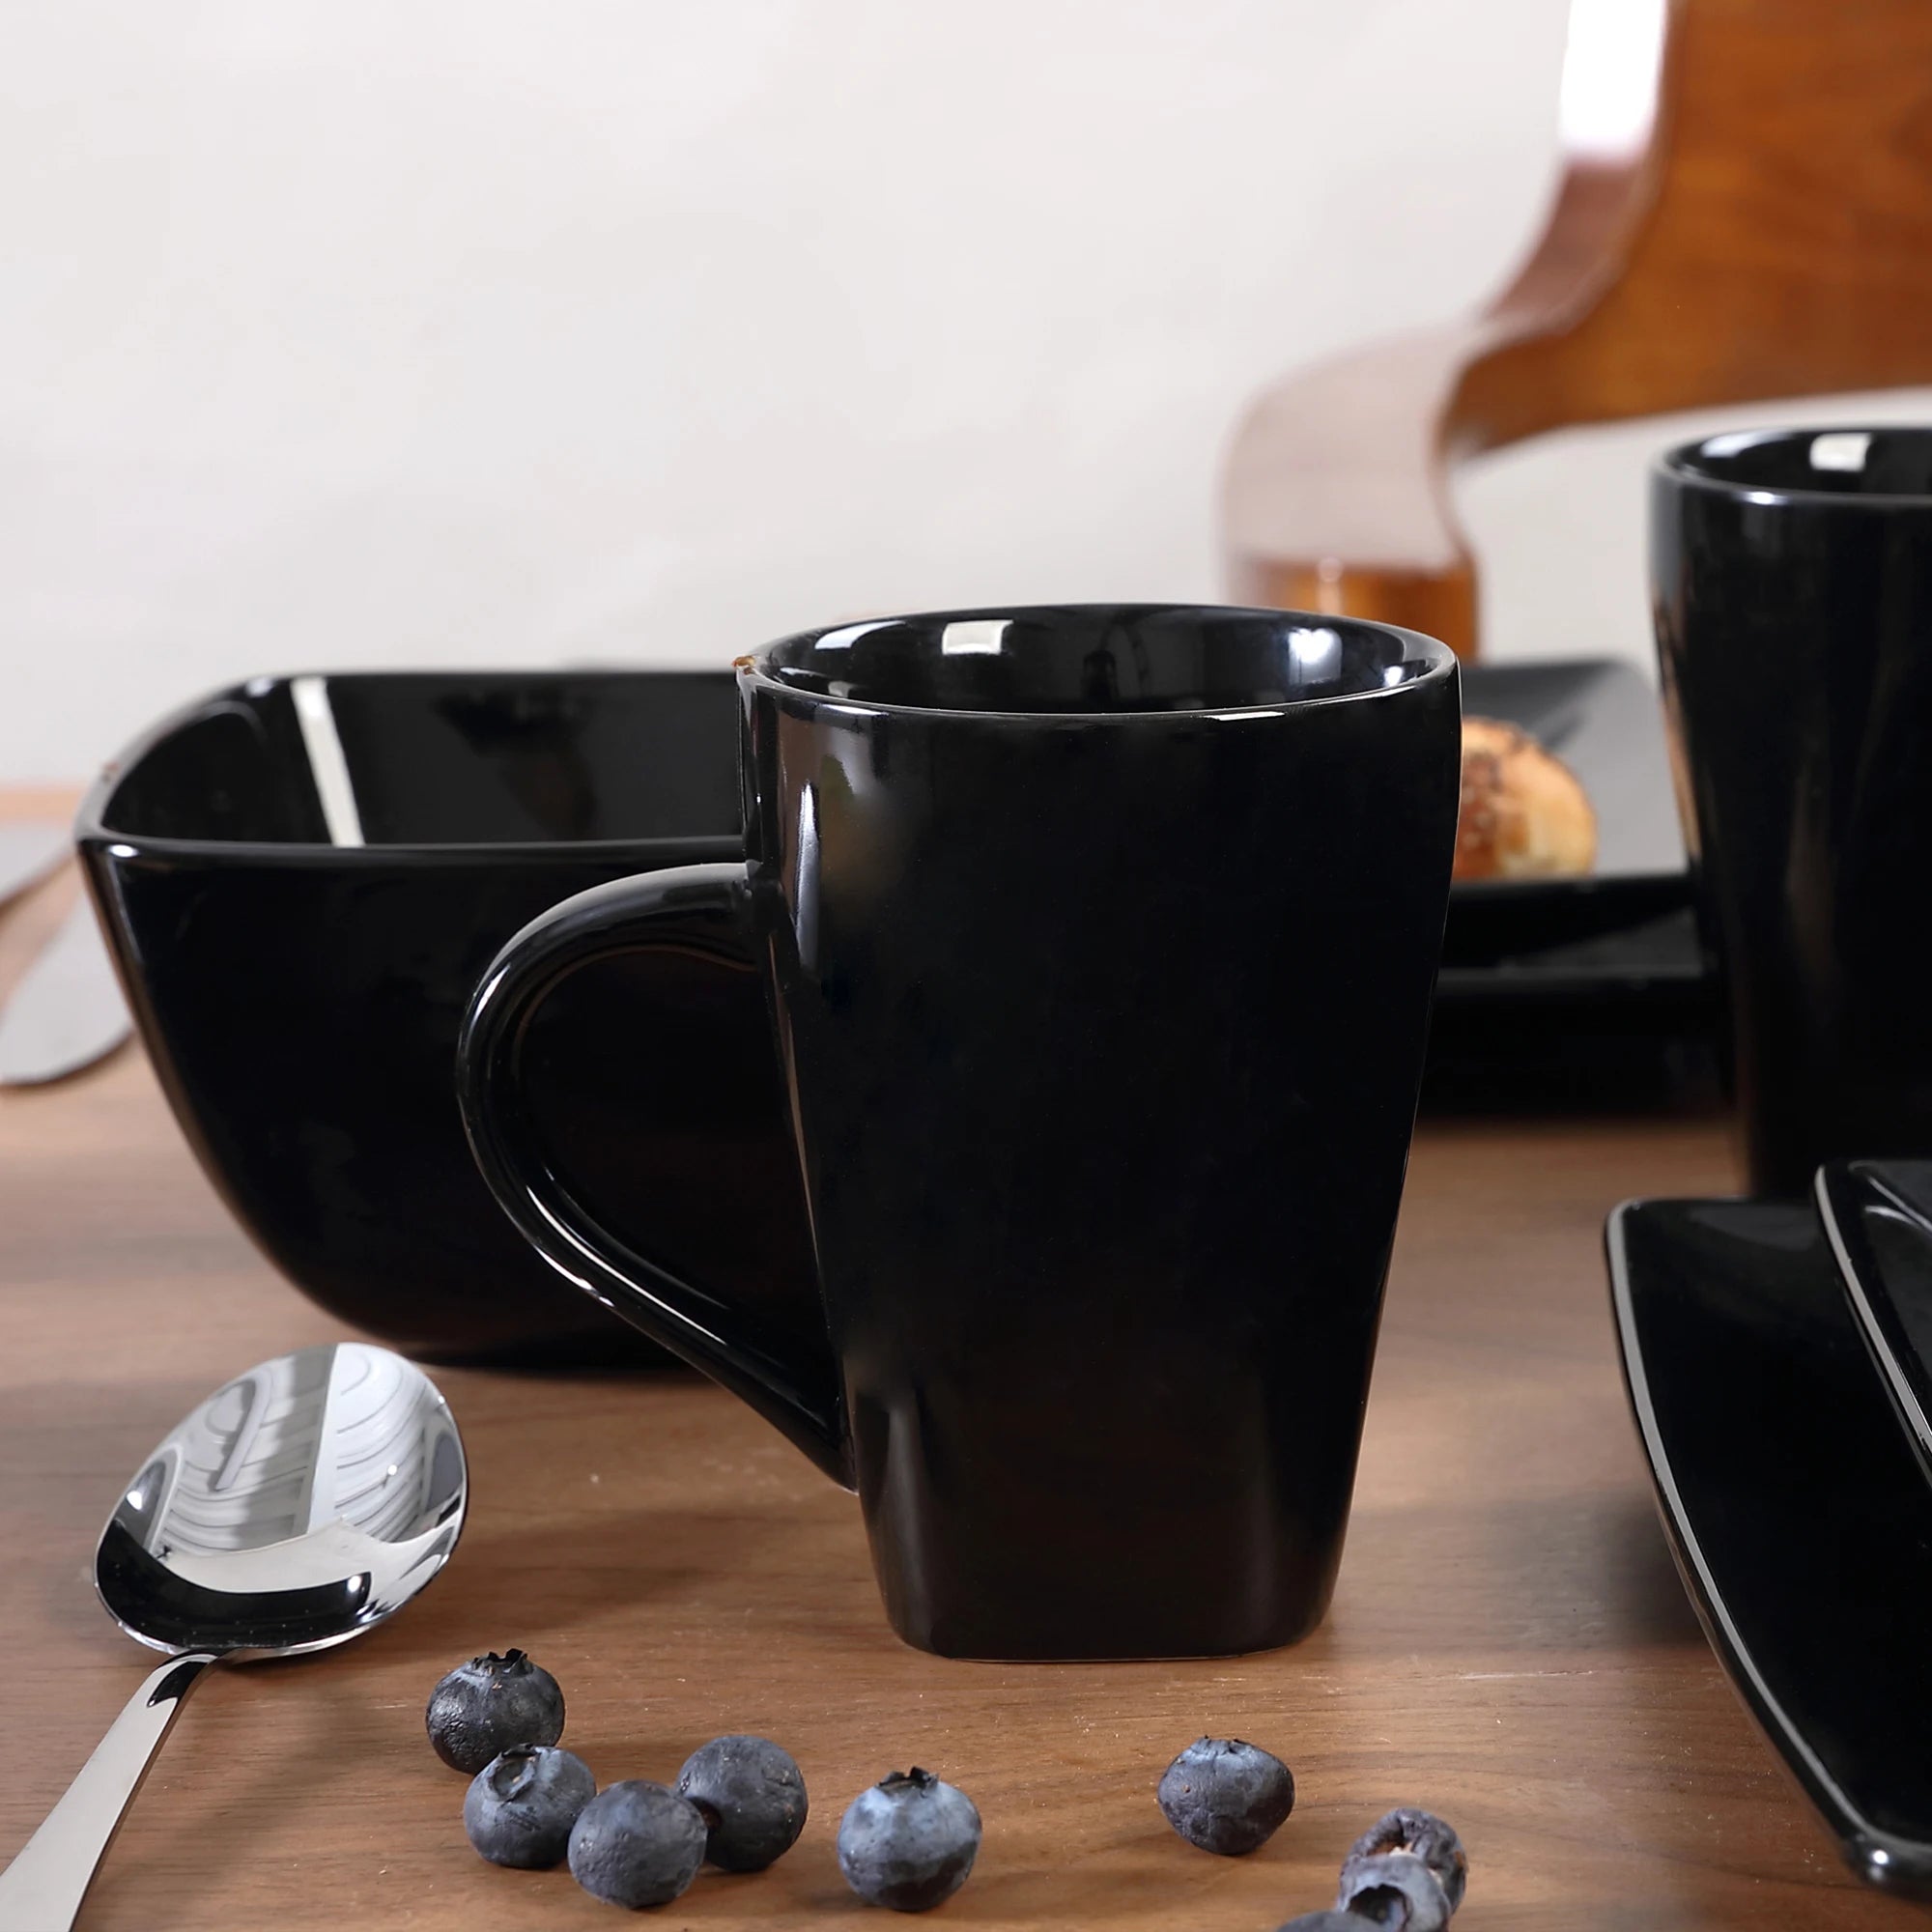 Michelle Black Ceramic Porcelain Square Dinnerware Set